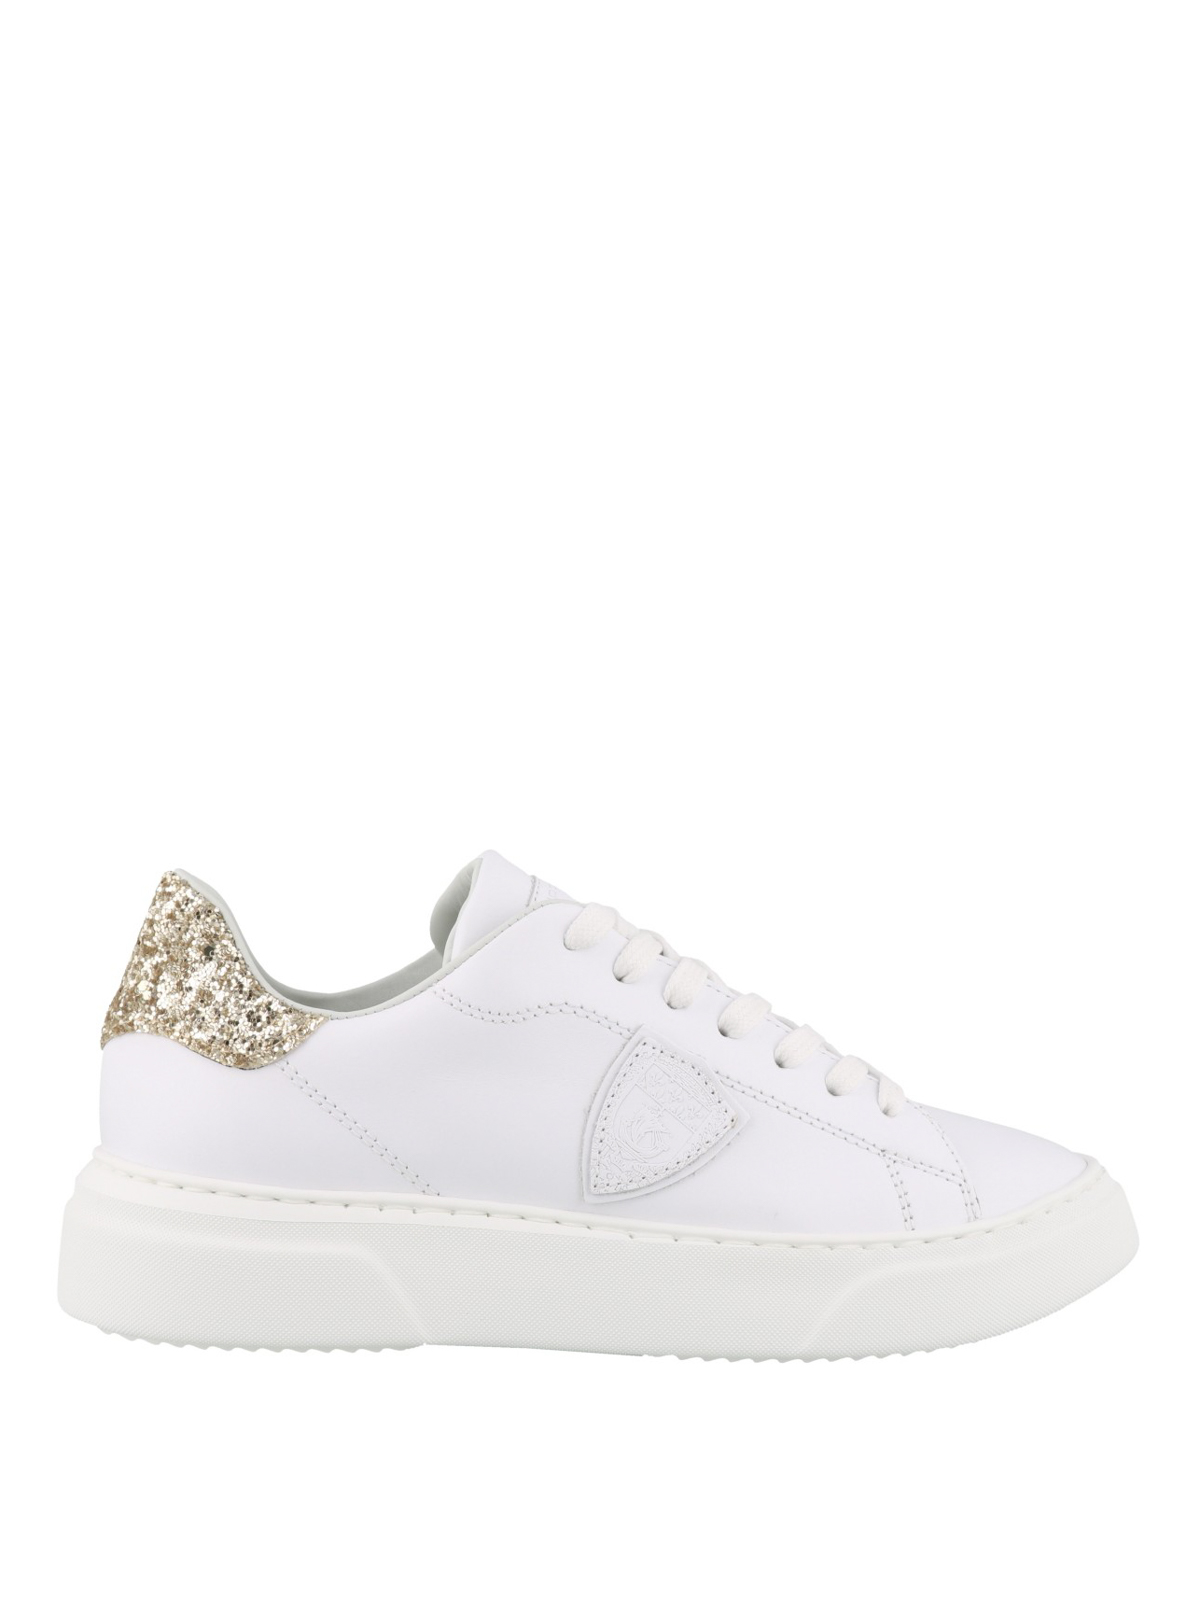 Sneaker Temple in pelle bianca e glitter H-Brands Donna Scarpe Sneakers Sneakers con glitter 